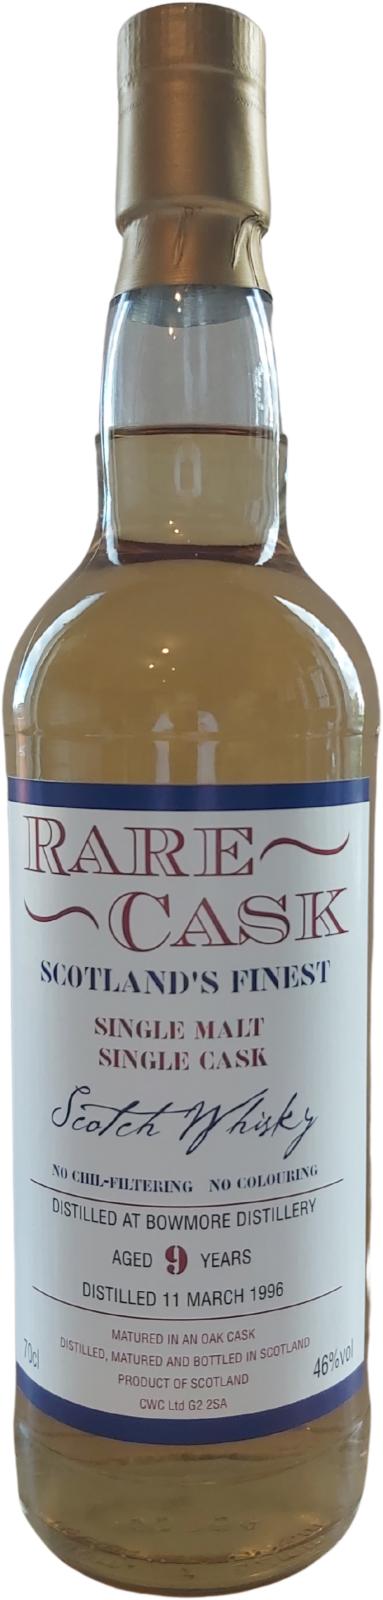 Bowmore 1996 CWC Rare Casks Scotland's Finest 46% 700ml